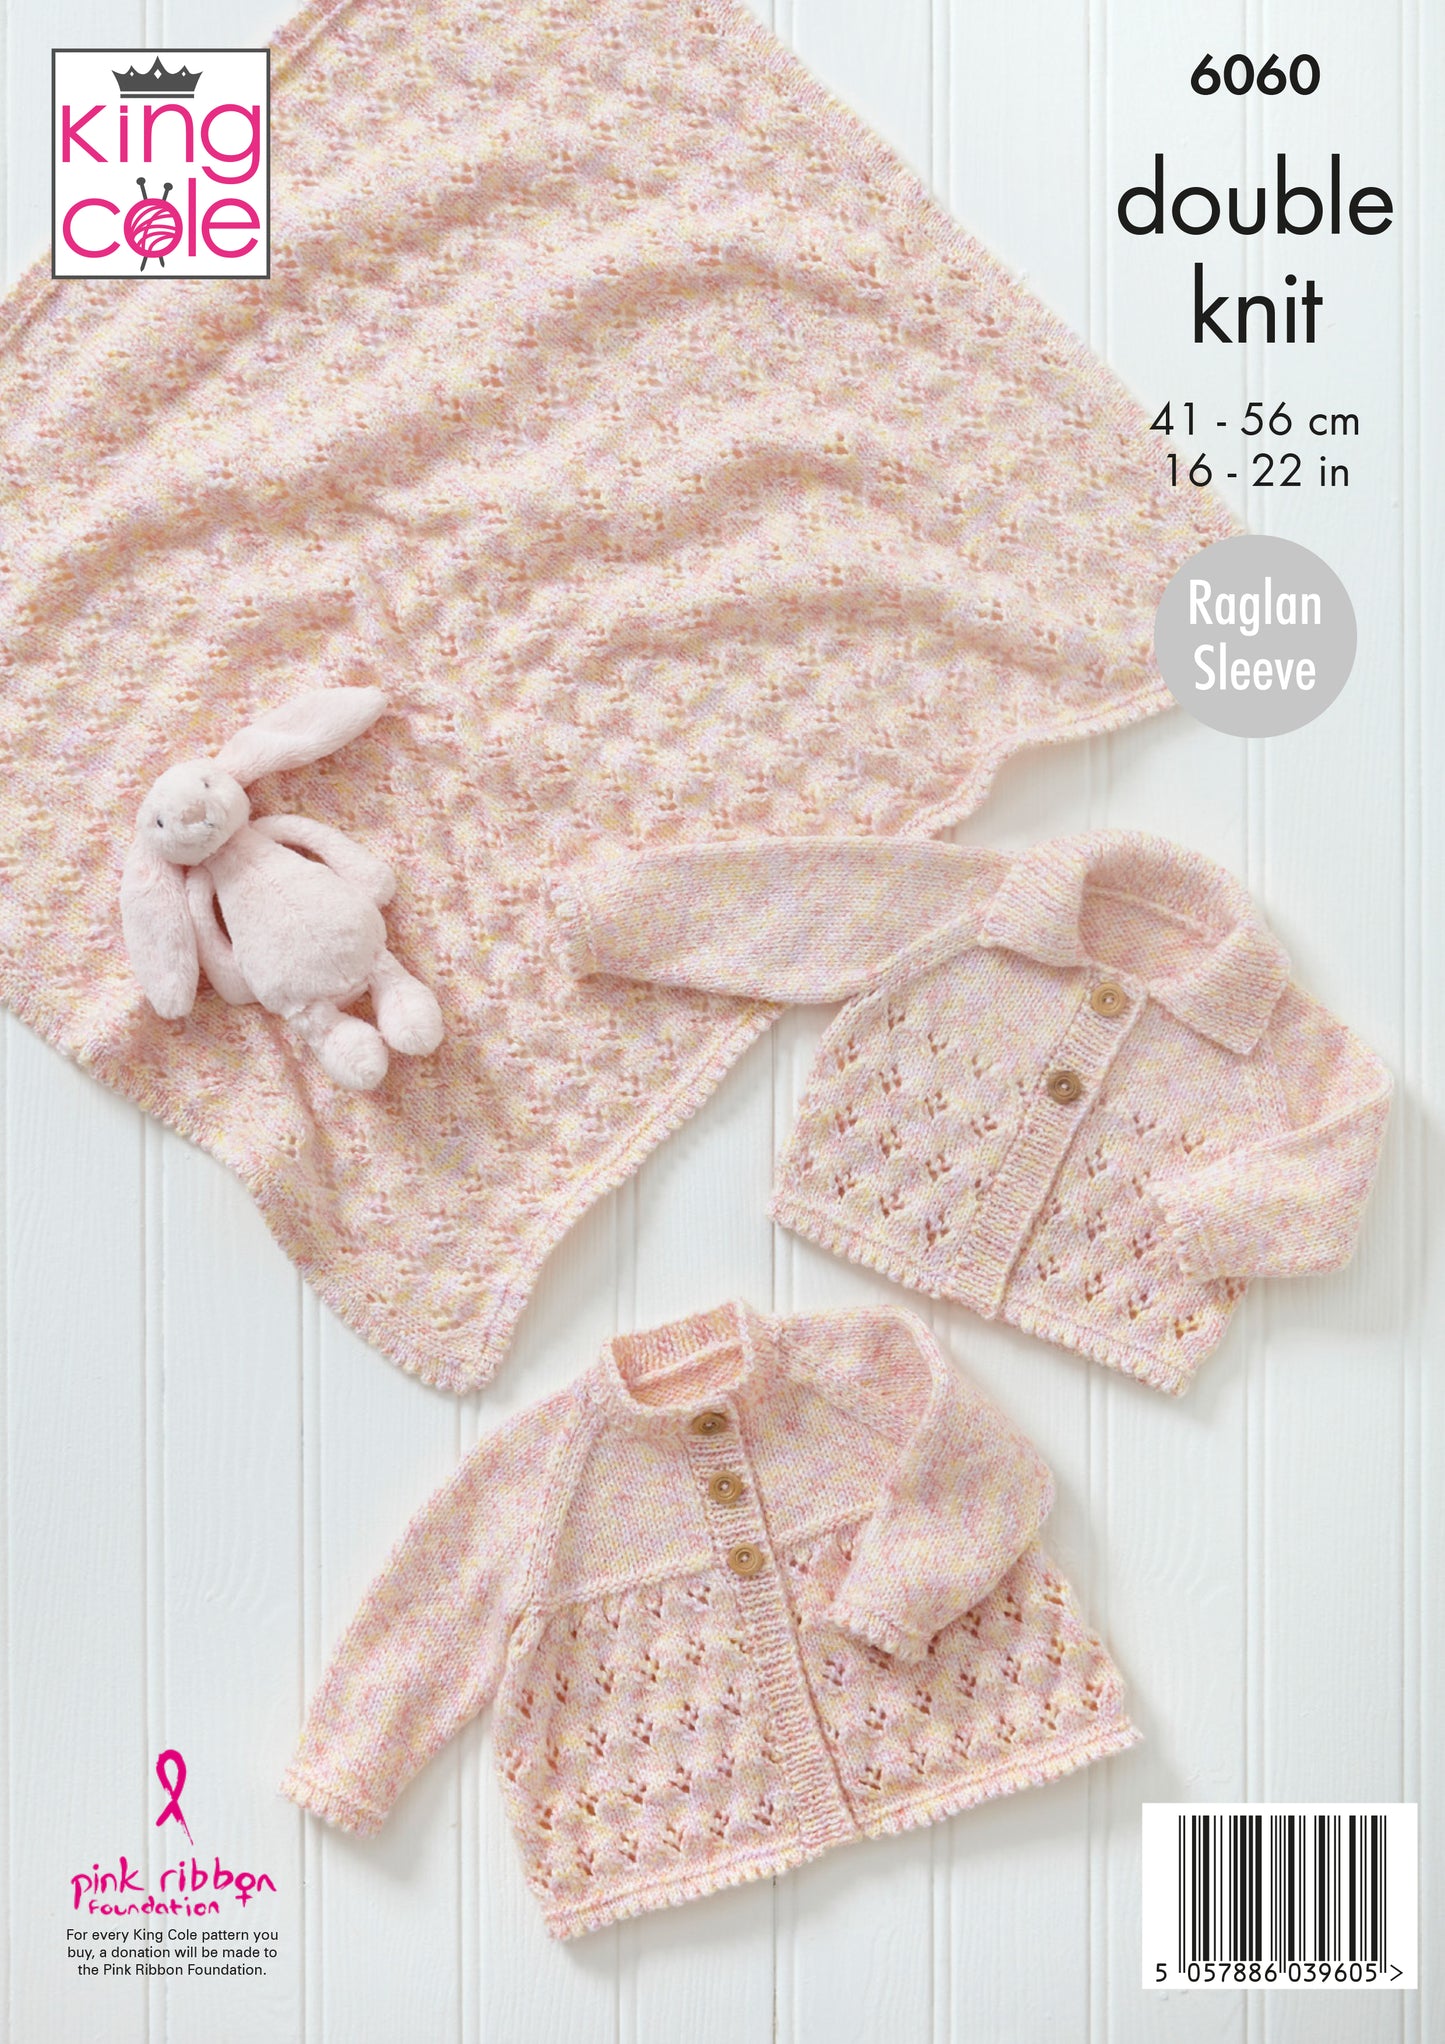 Knitting Pattern 6060 - Jacket, Cardigan, & Blanket Knitted in Cloud Nine DK